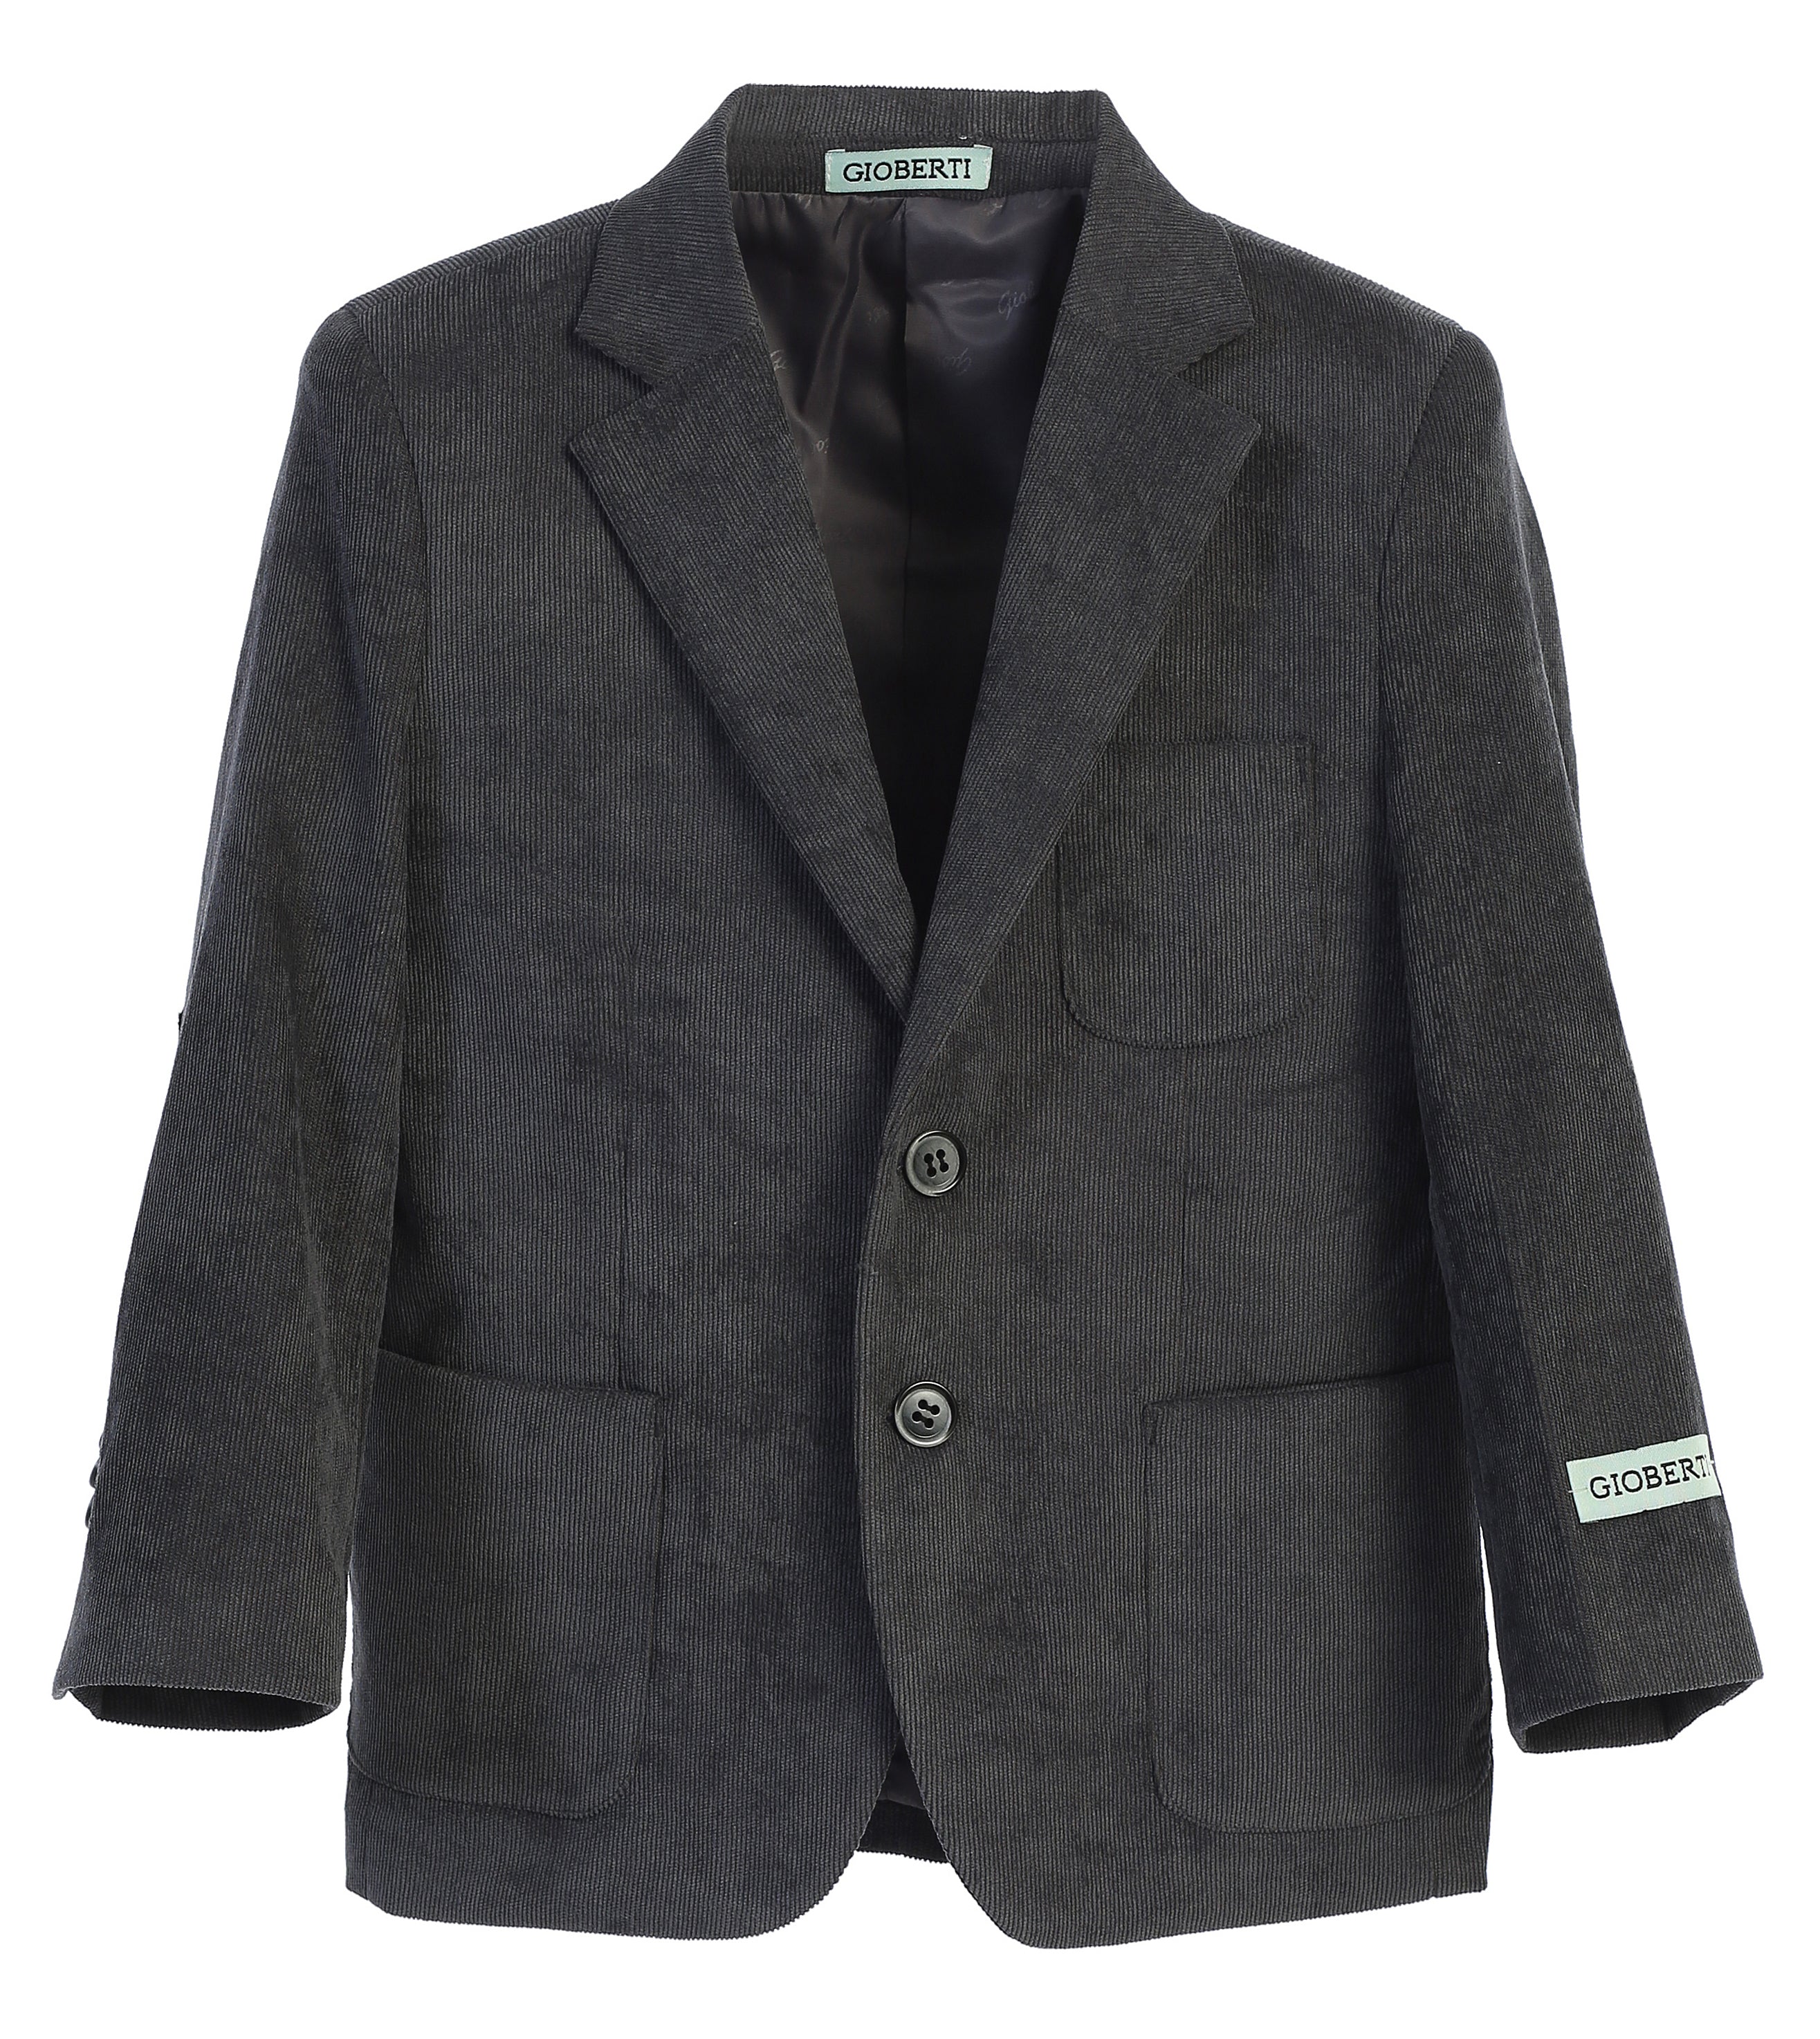 Barrge | Jackets & Coats | Barrage Boys Black Blazer Sports Coat Jacket  Size 2 | Poshmark